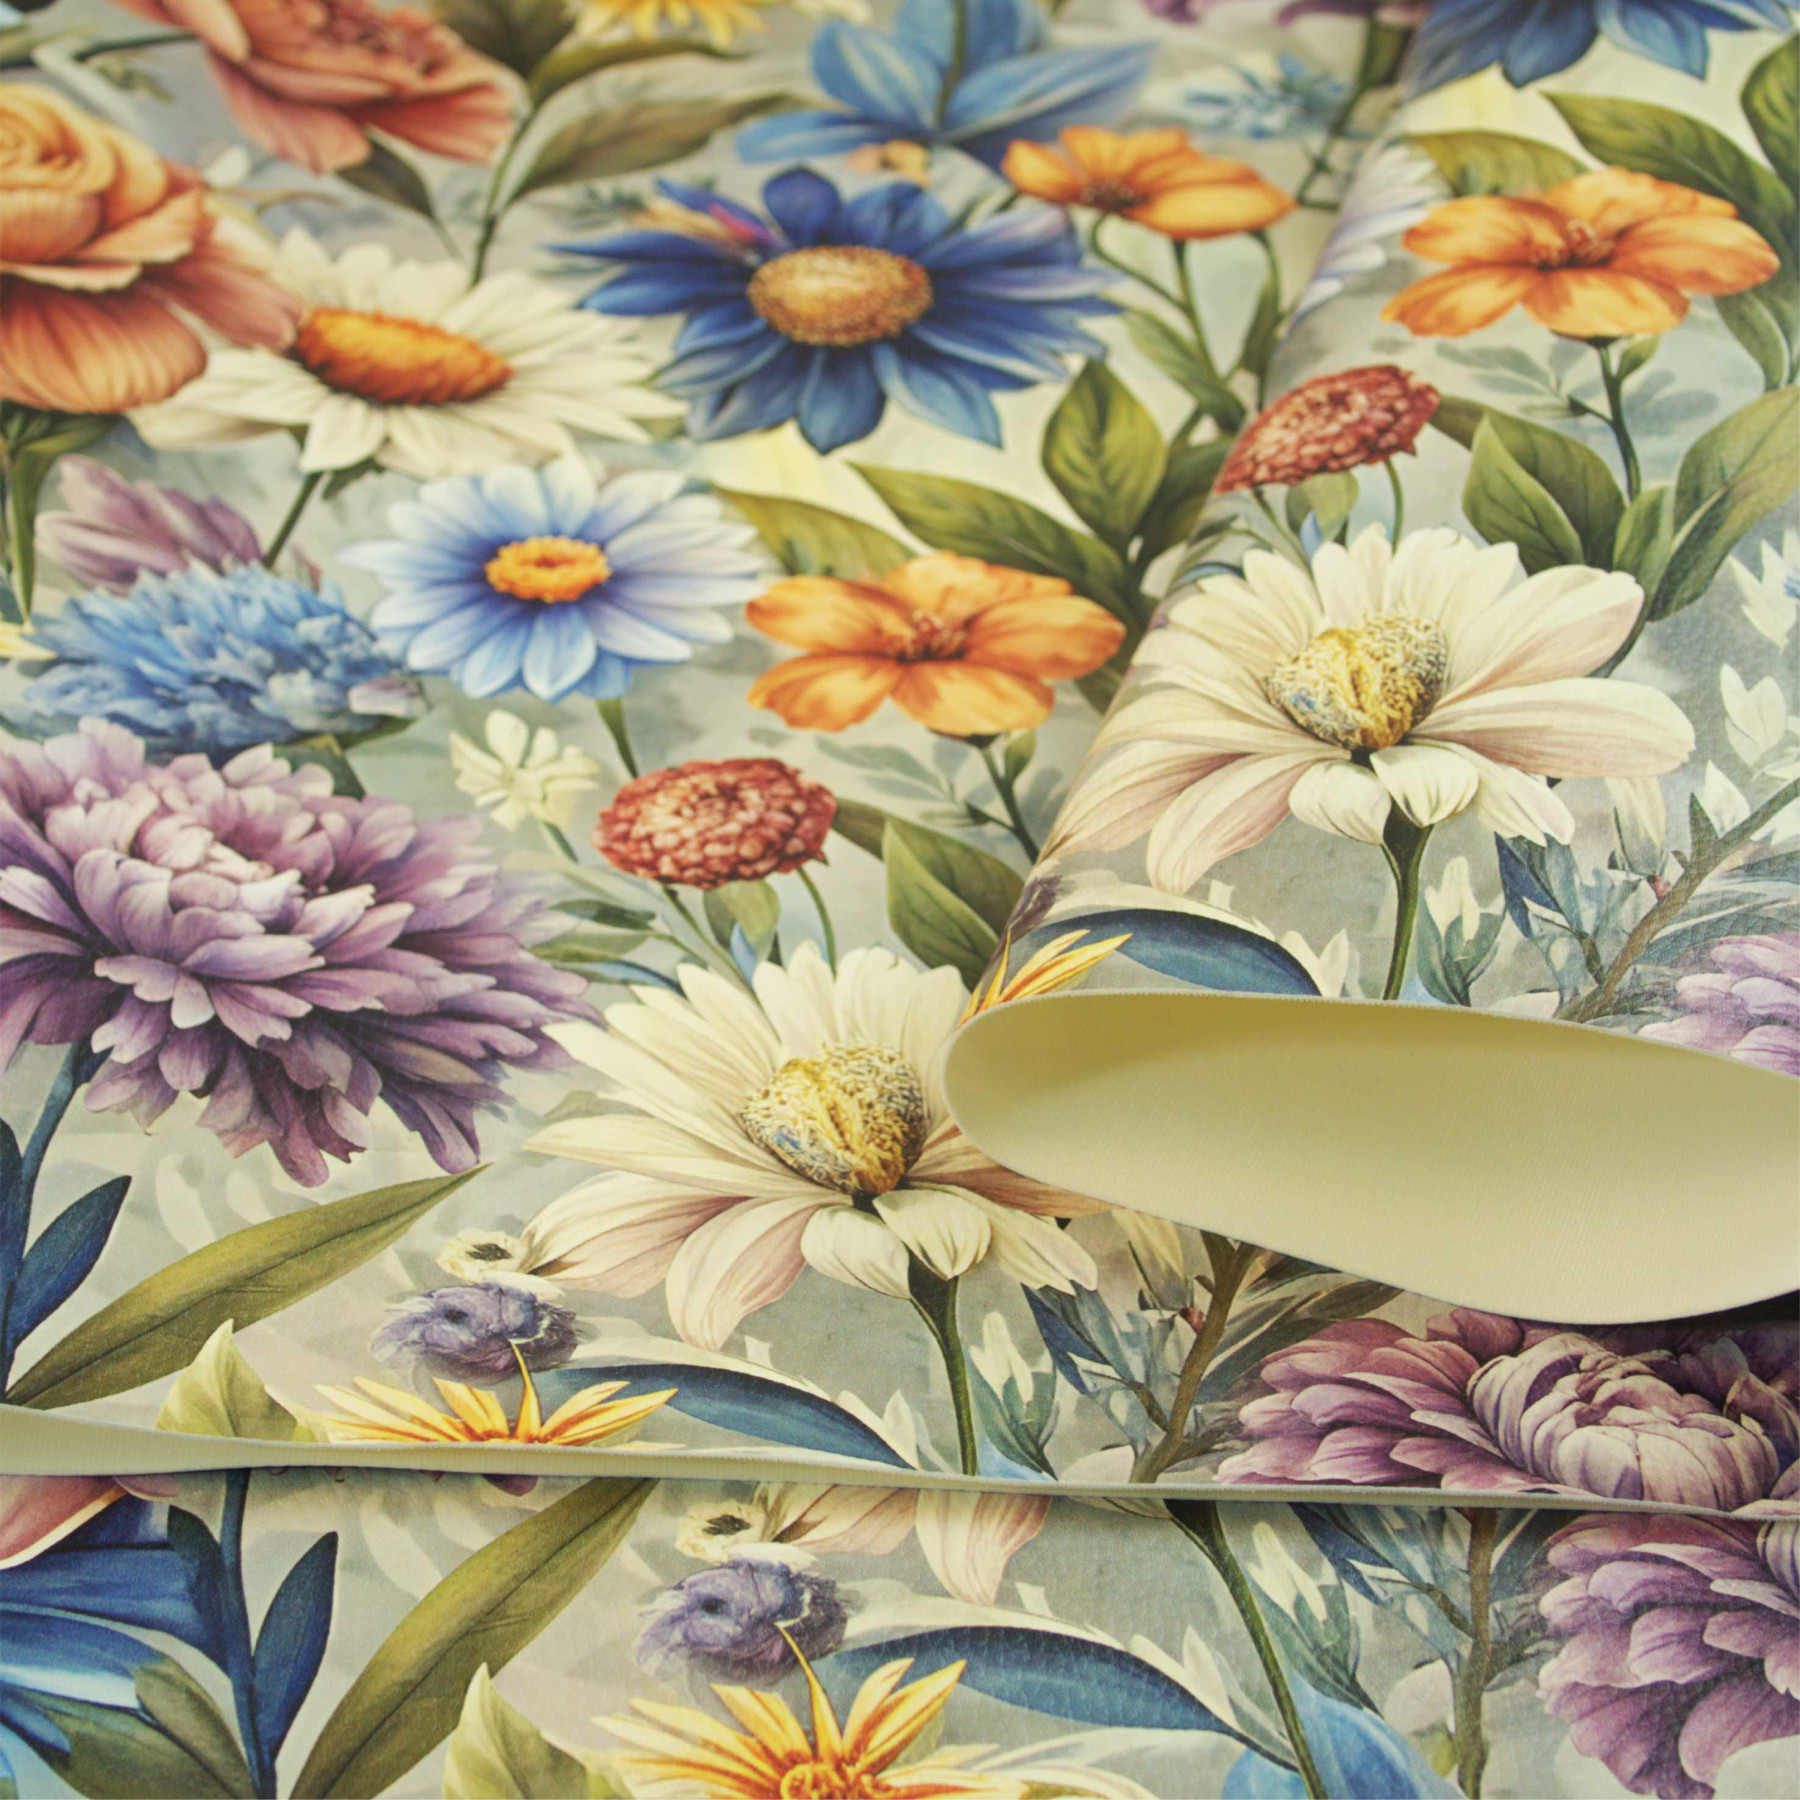 FLOWERS pat.15 (46 cm x 50 cm) - thick pressed leatherette